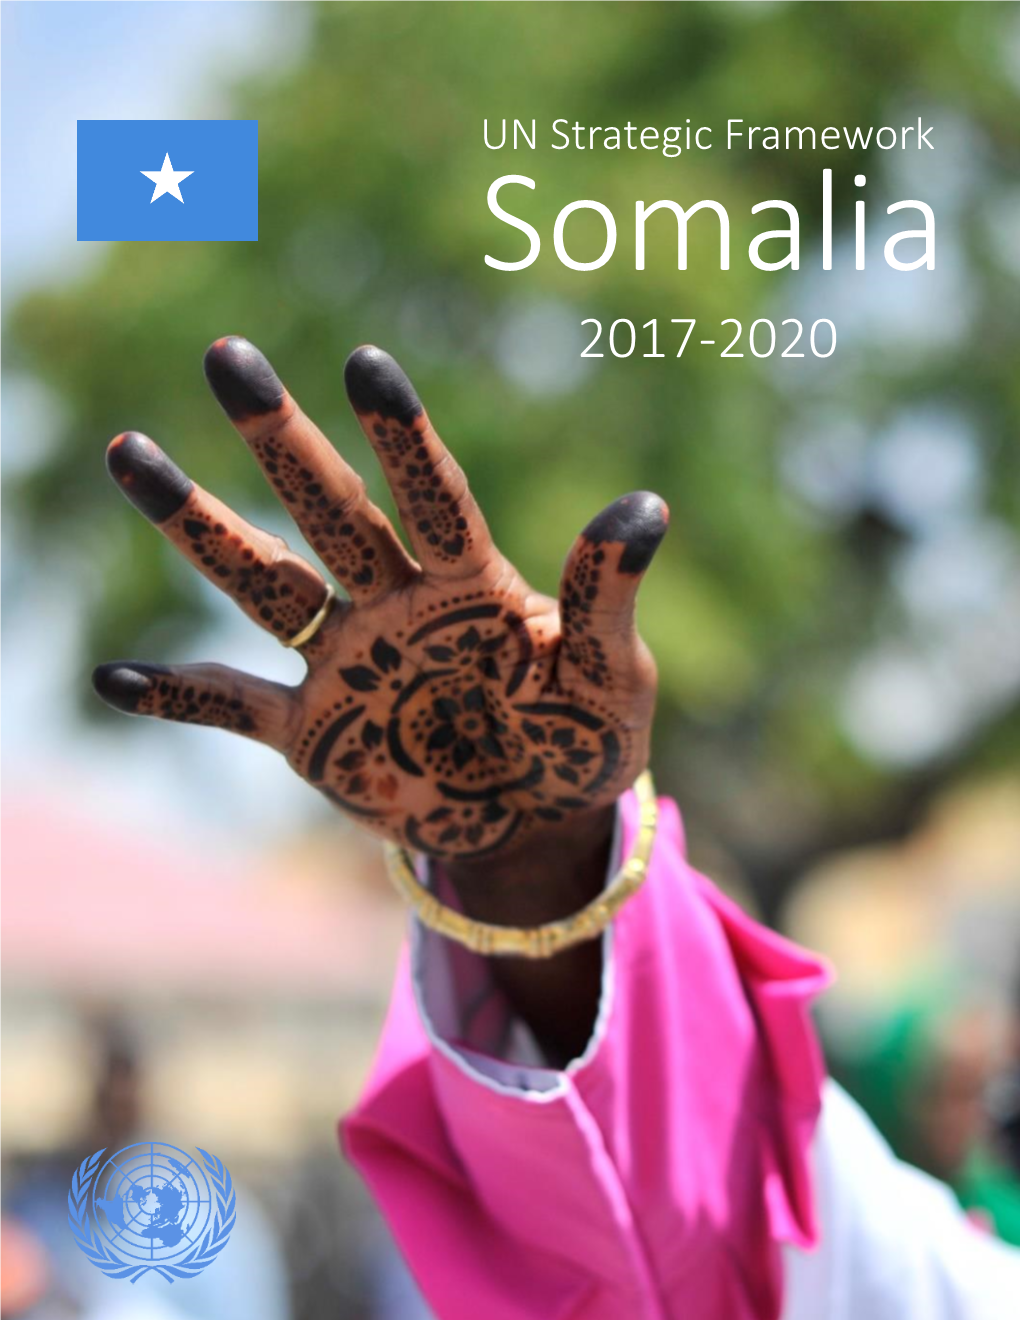 Somalia UN Strategic Framework 2017-2020